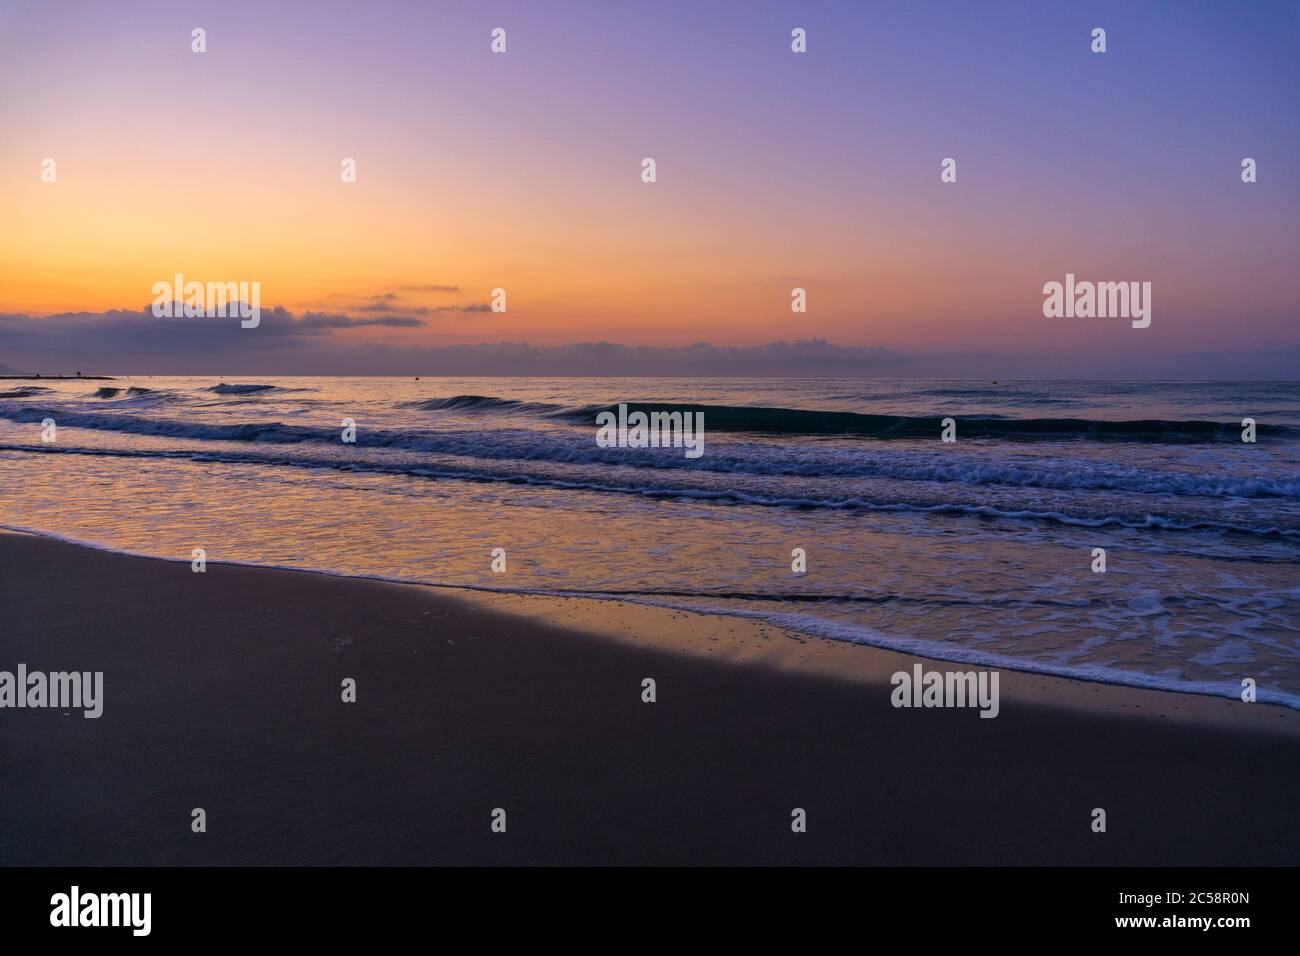 Sunrise on a beach in Benicassim, Costa azahar, Spain Stock Photo